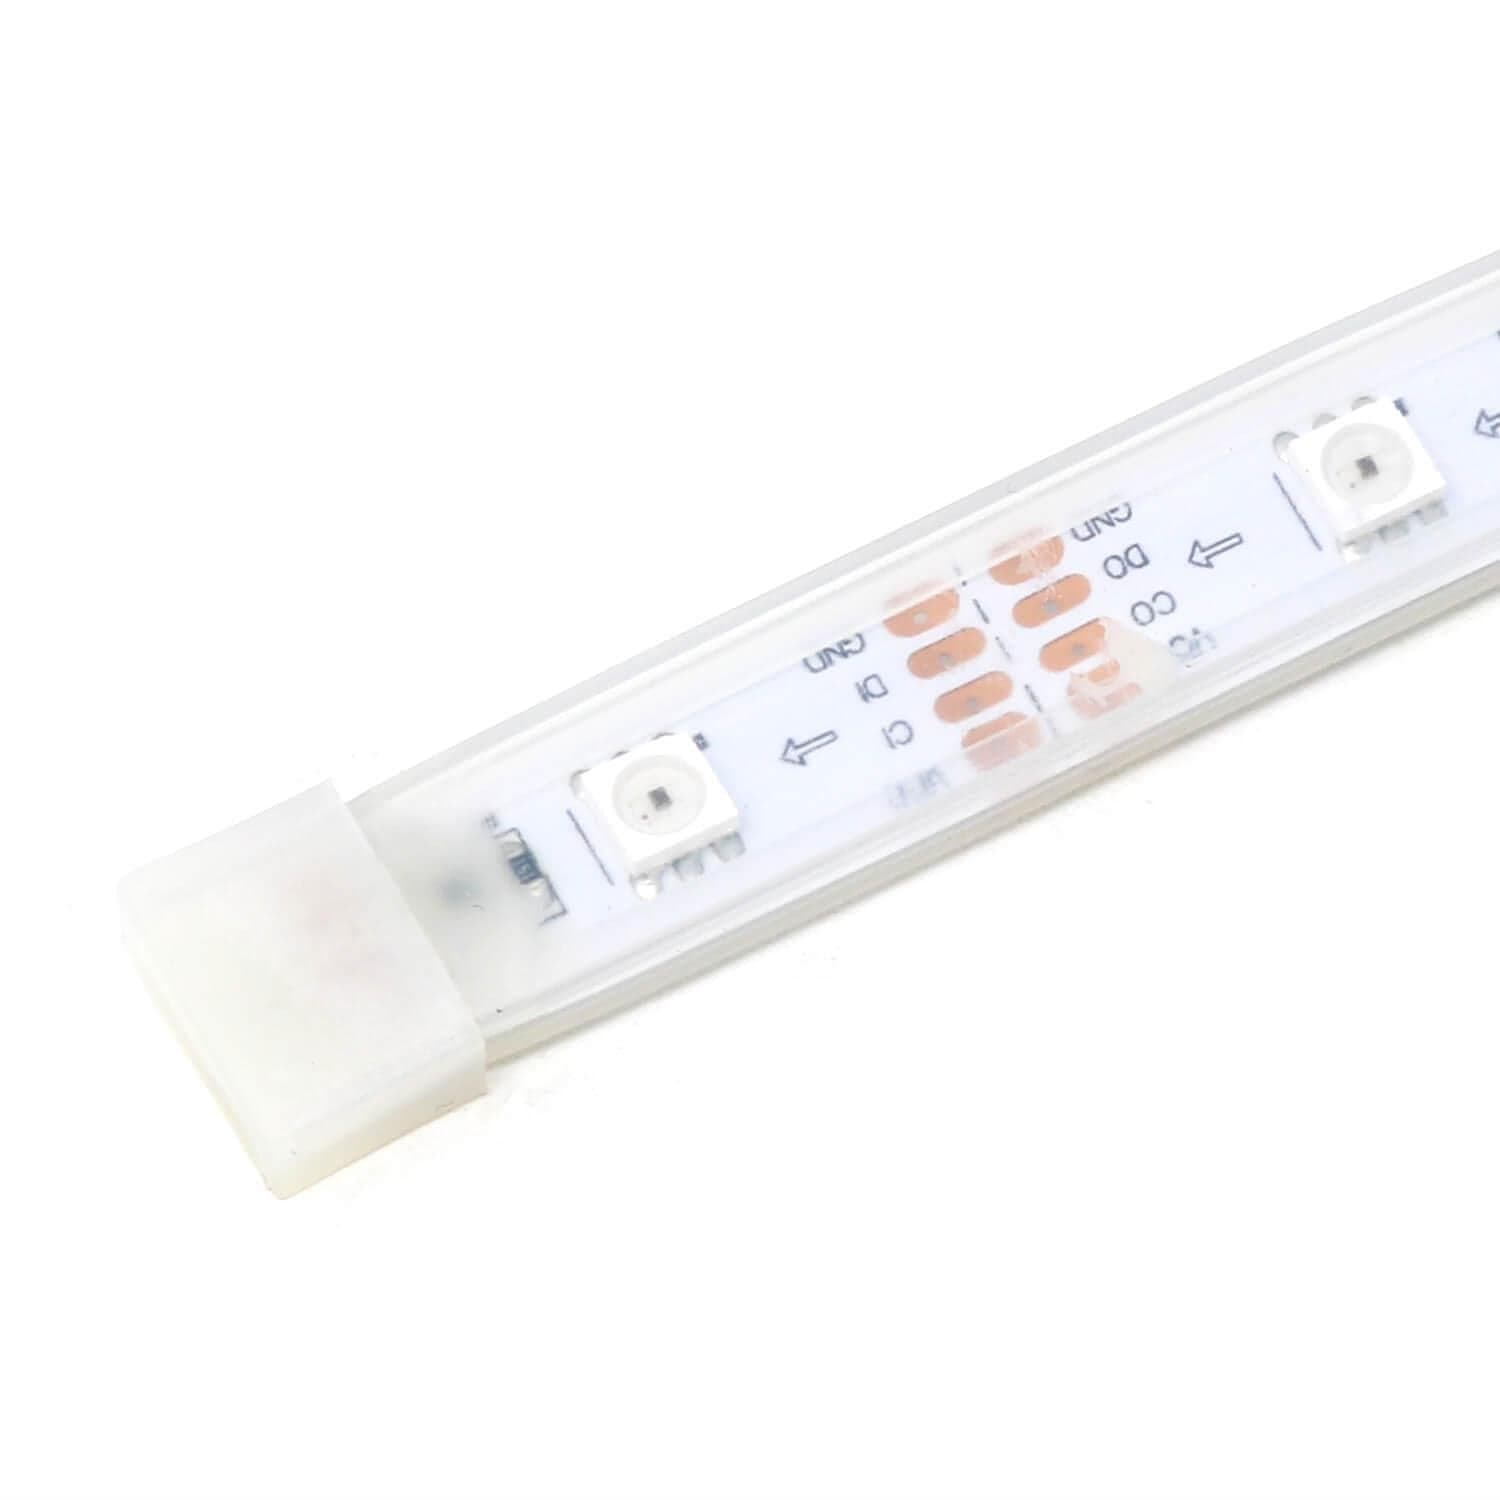 Flexible RGB LED Strip (DotStar/APA102/SK9822 Compatible) - 30 LED/Metre - The Pi Hut